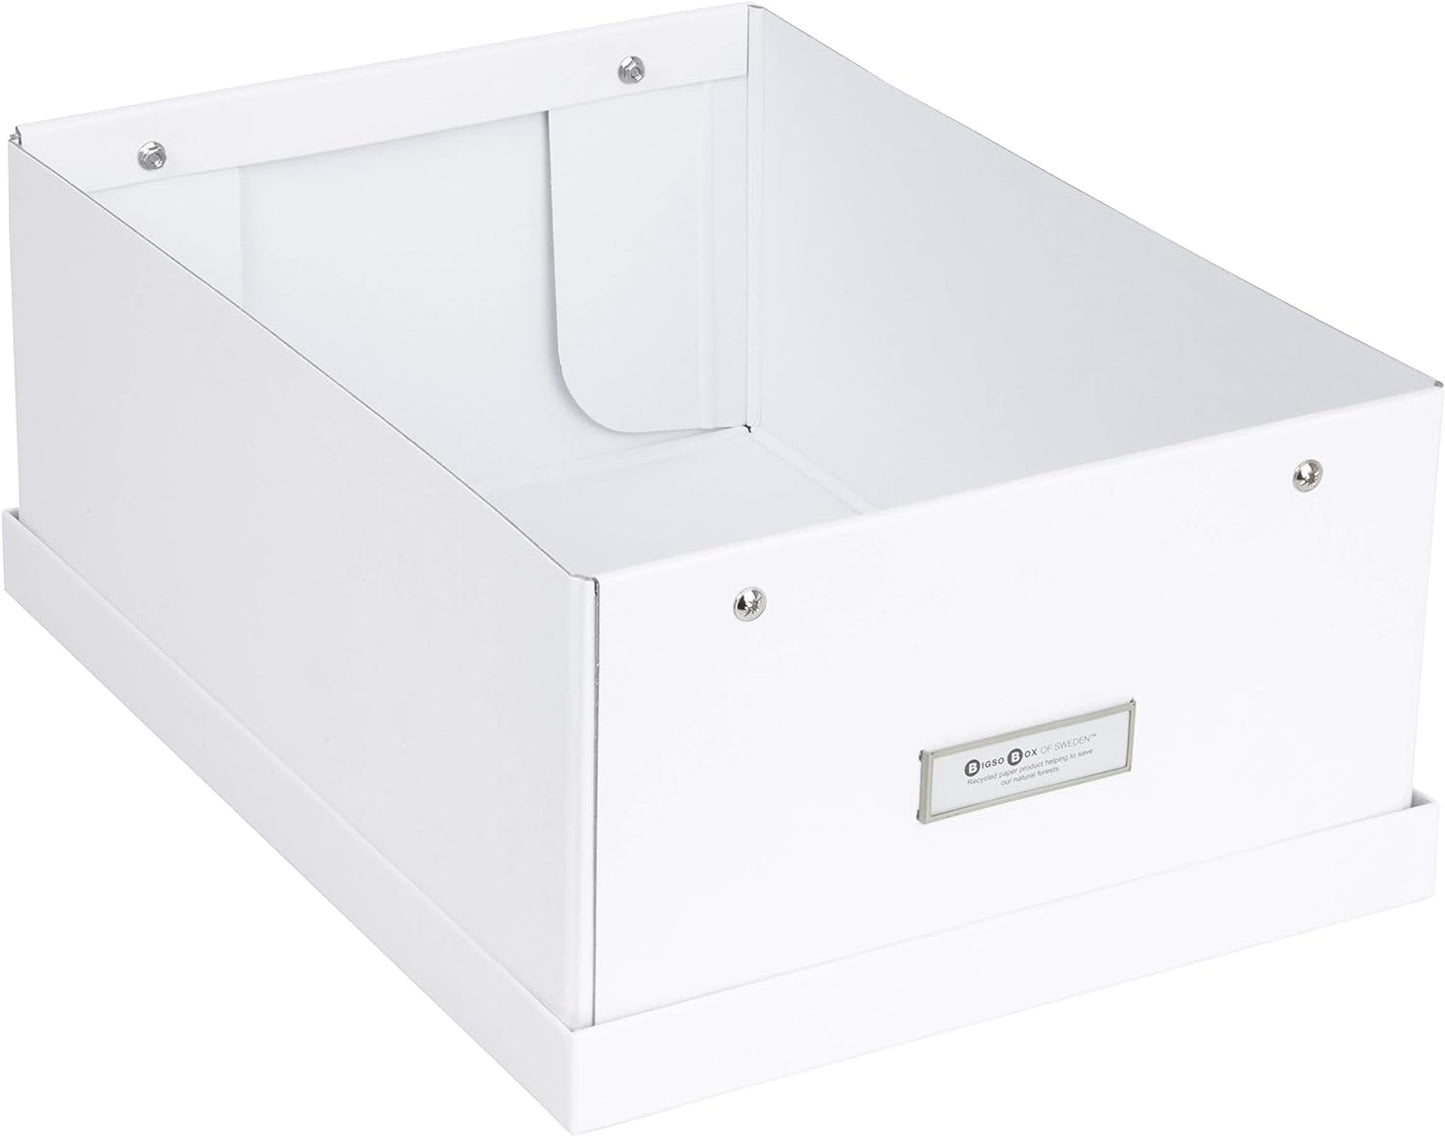 Bigso Katia Collapsible Photo Storage Box with Lid 11.3″ x 15.4″ x 6.4″